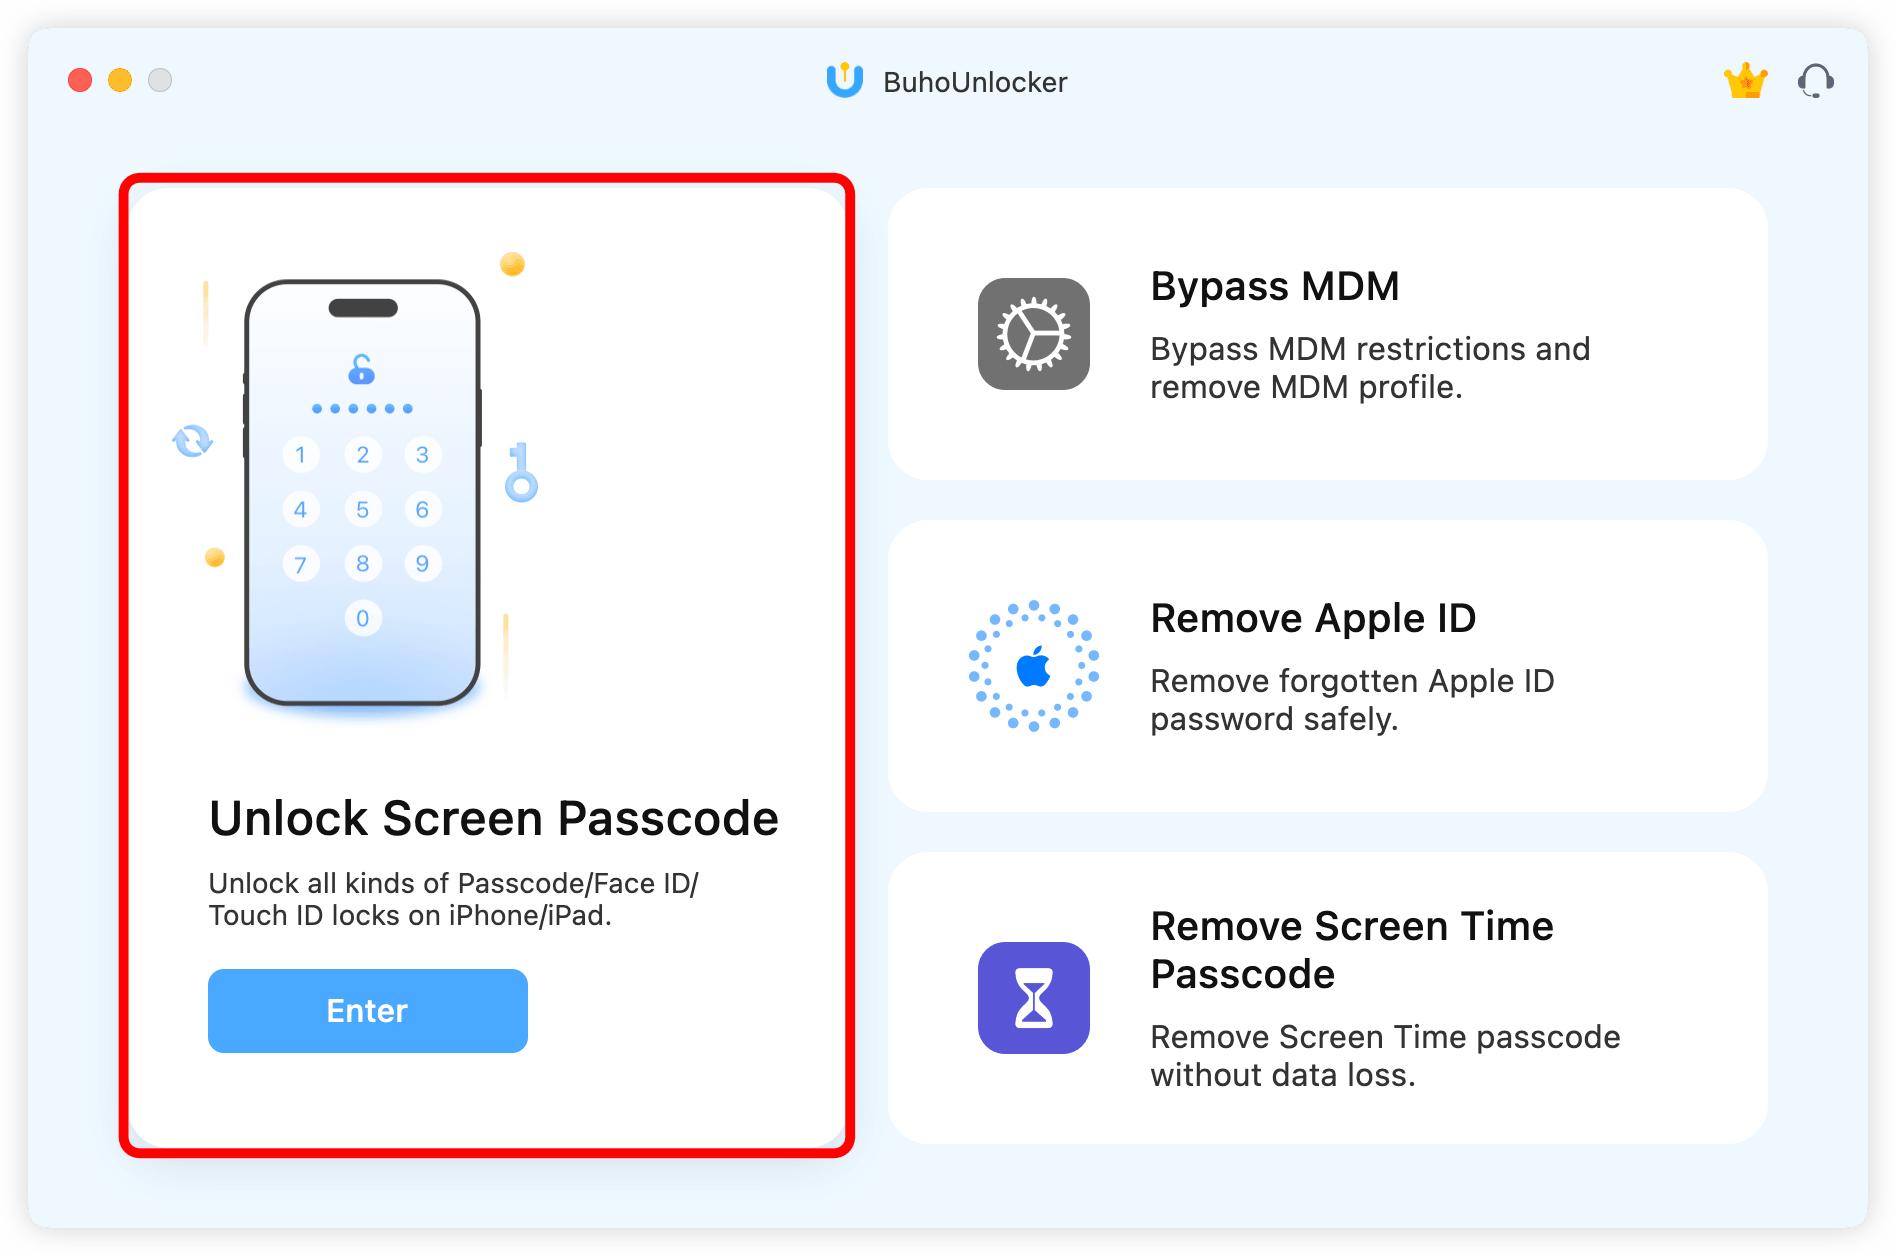 Select Unlock Screen Passcode